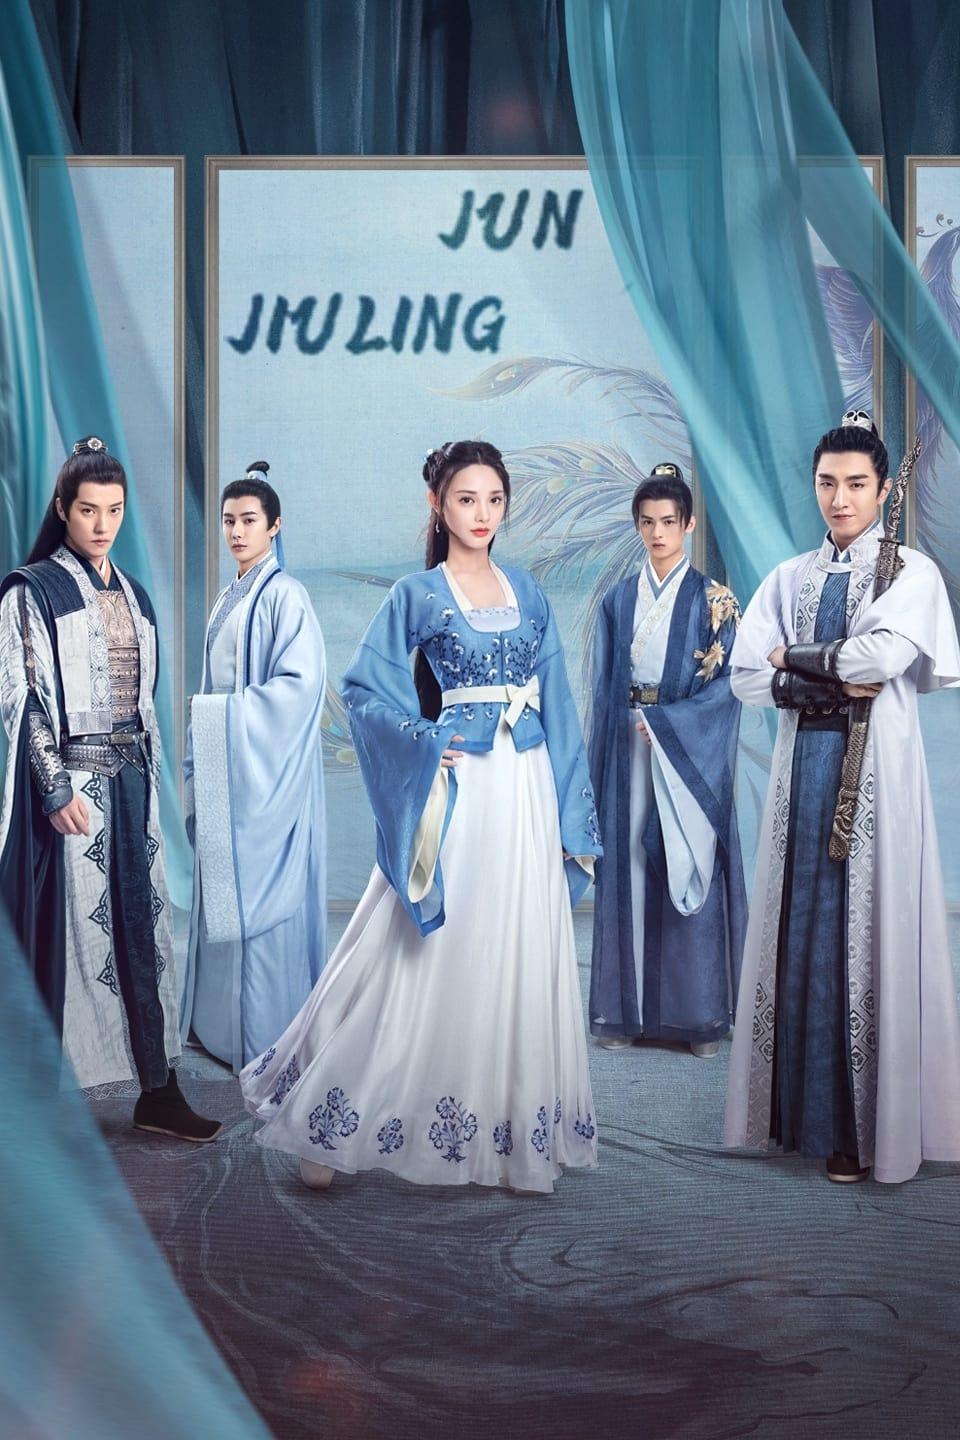 Jun Jiu Ling poster